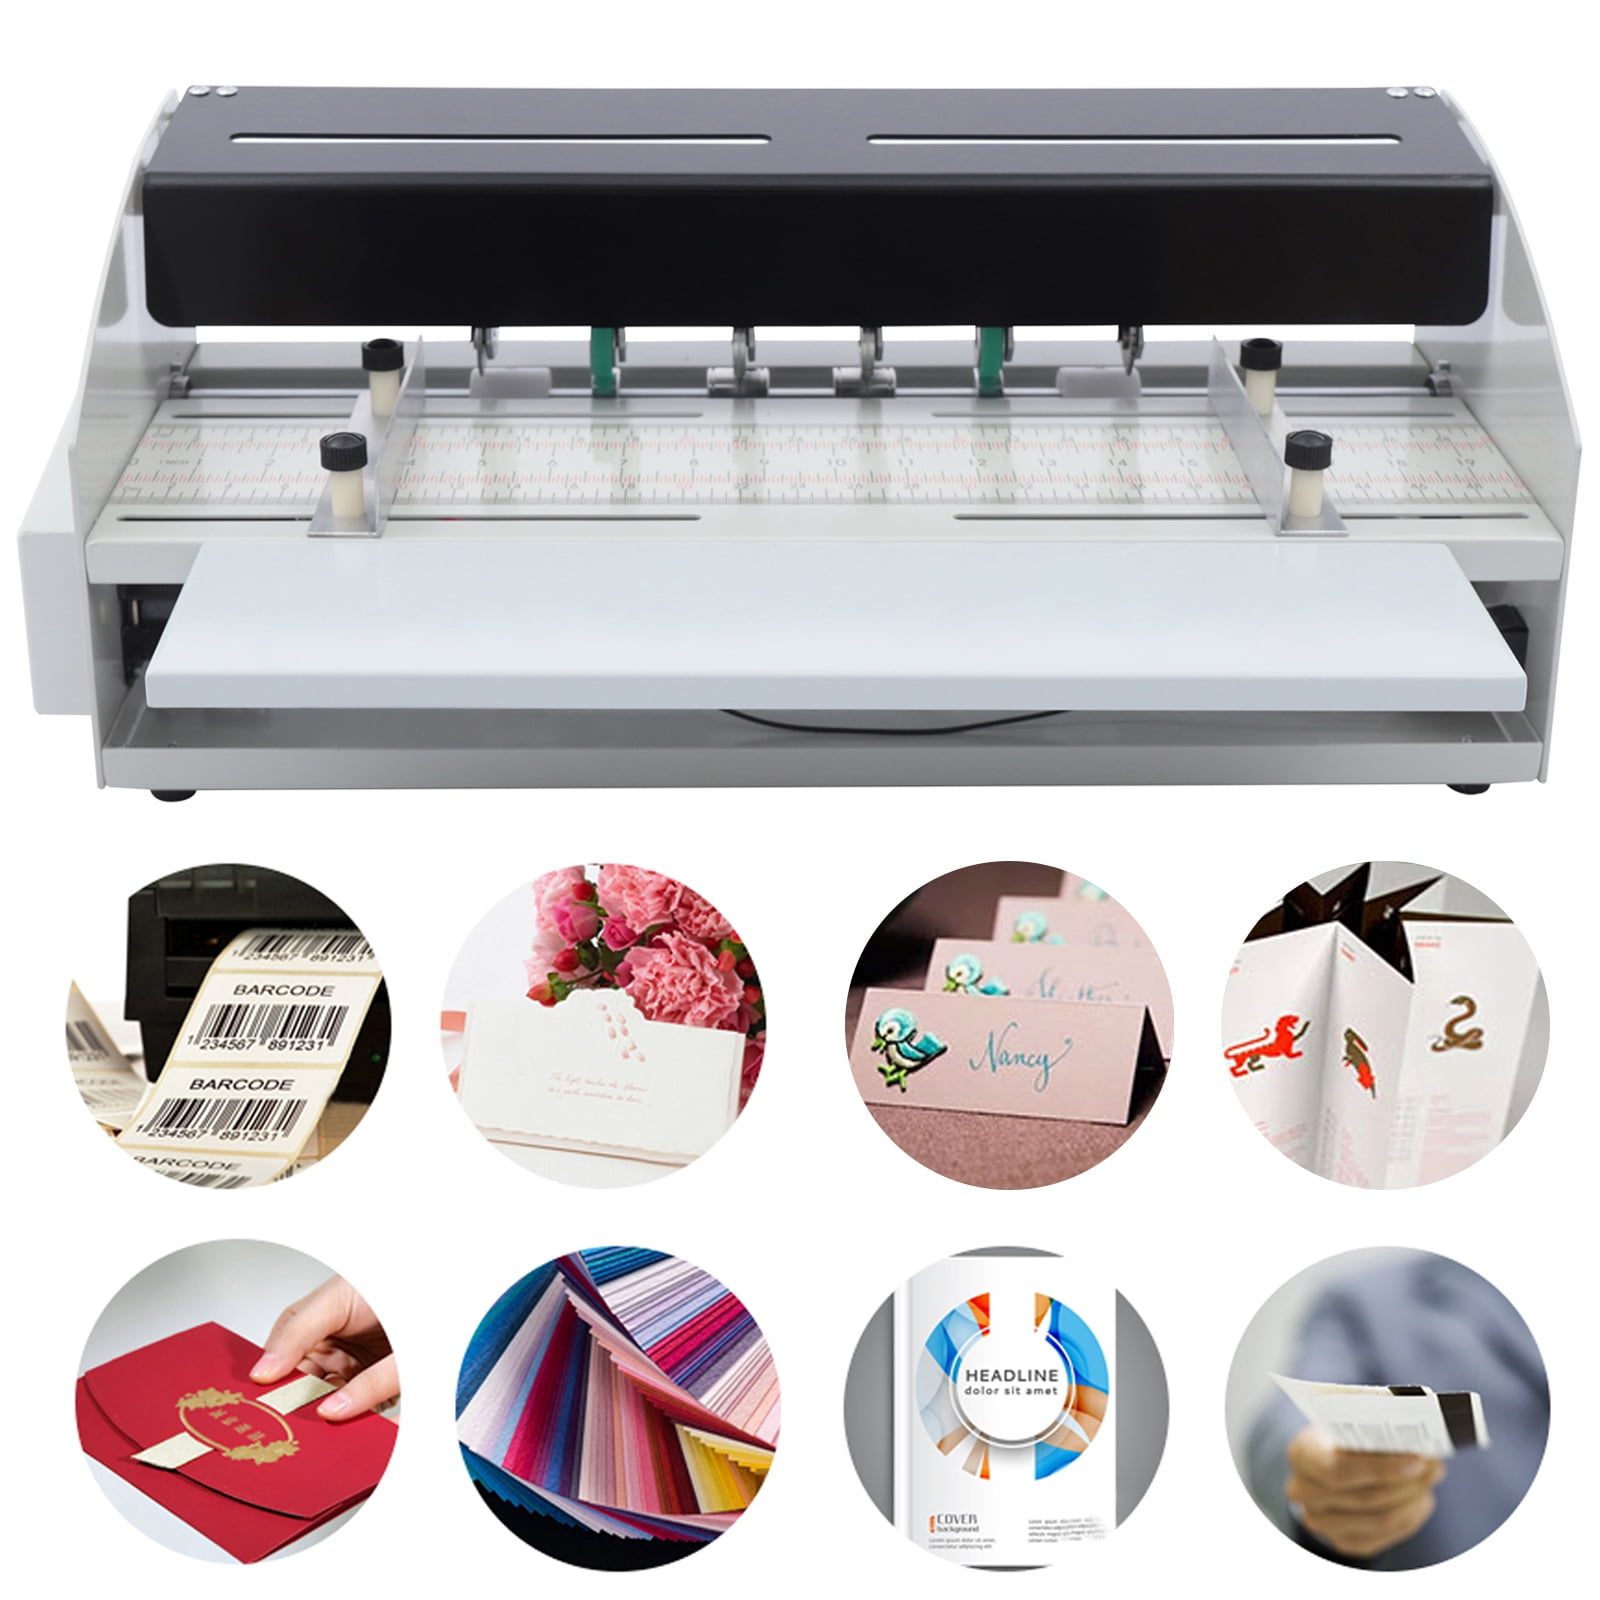 Miumaeov Electric Creasing Machine Paper Creaser Scorer Perforator Cutter for Cards, Size: 58.5